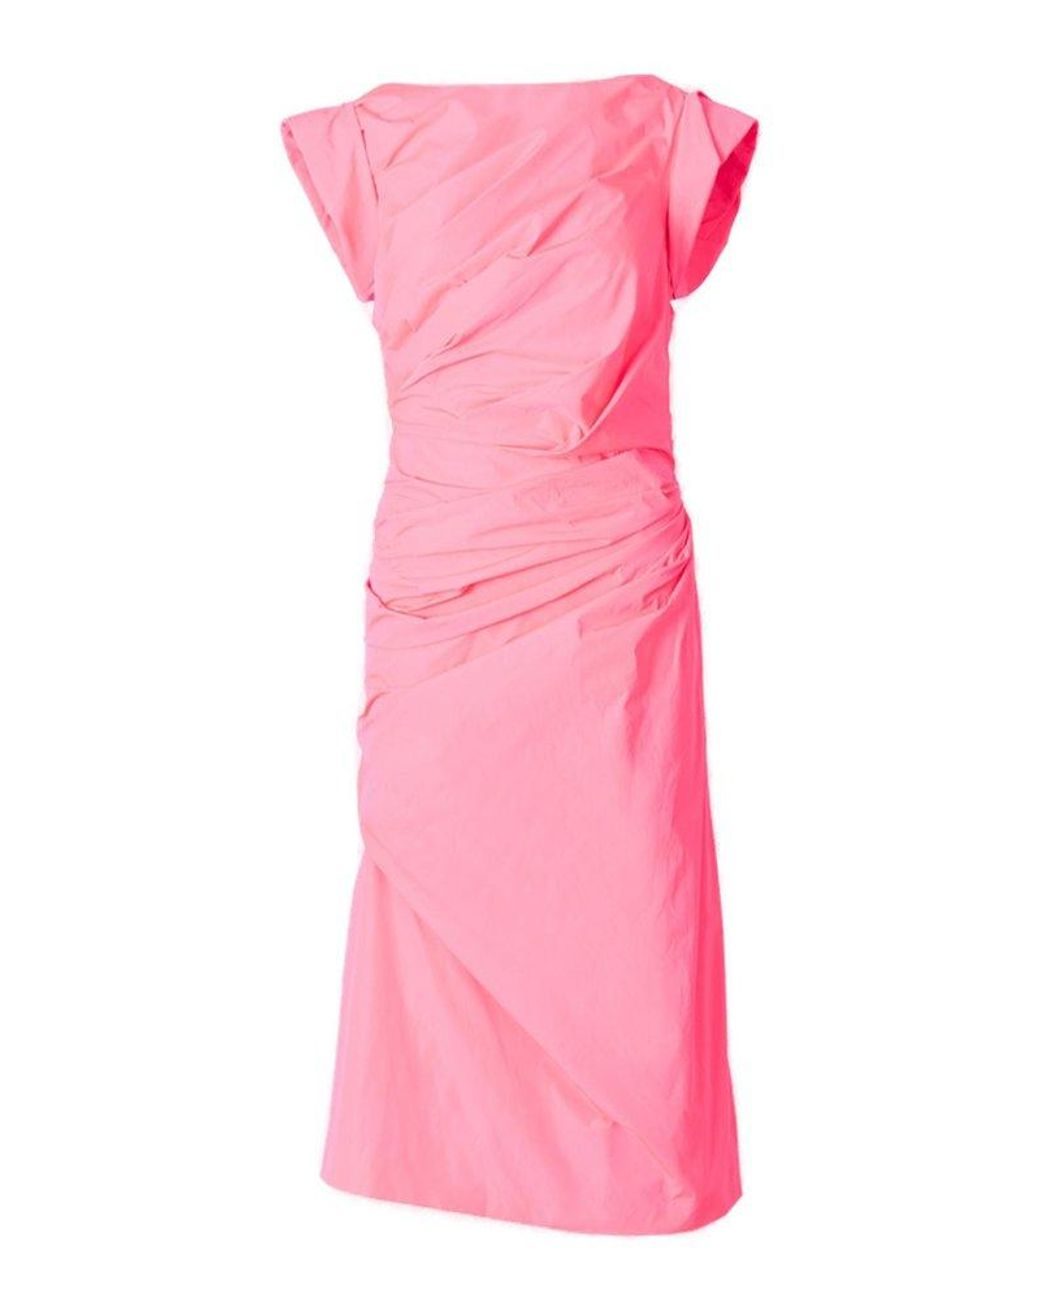 Dries Van Noten Synthetic Asymmetrical Draped Dress in Pink | Lyst Canada